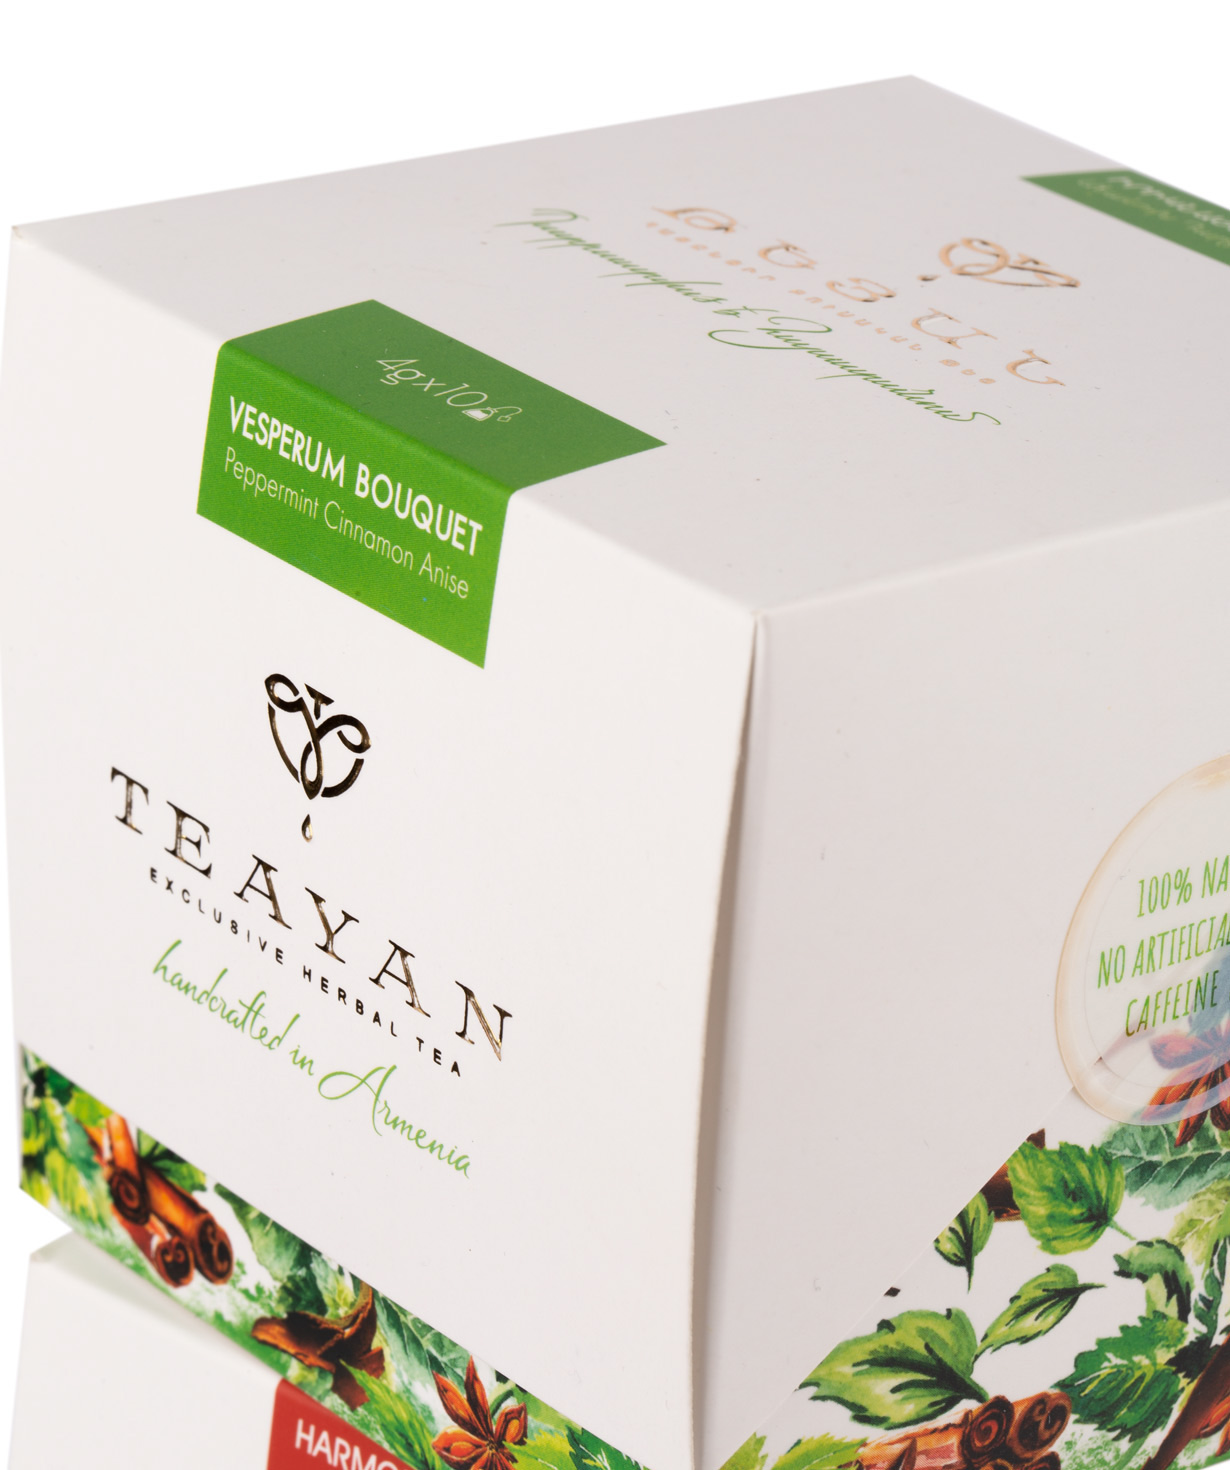 Selected tea `TeaYan` vesperum bouquet